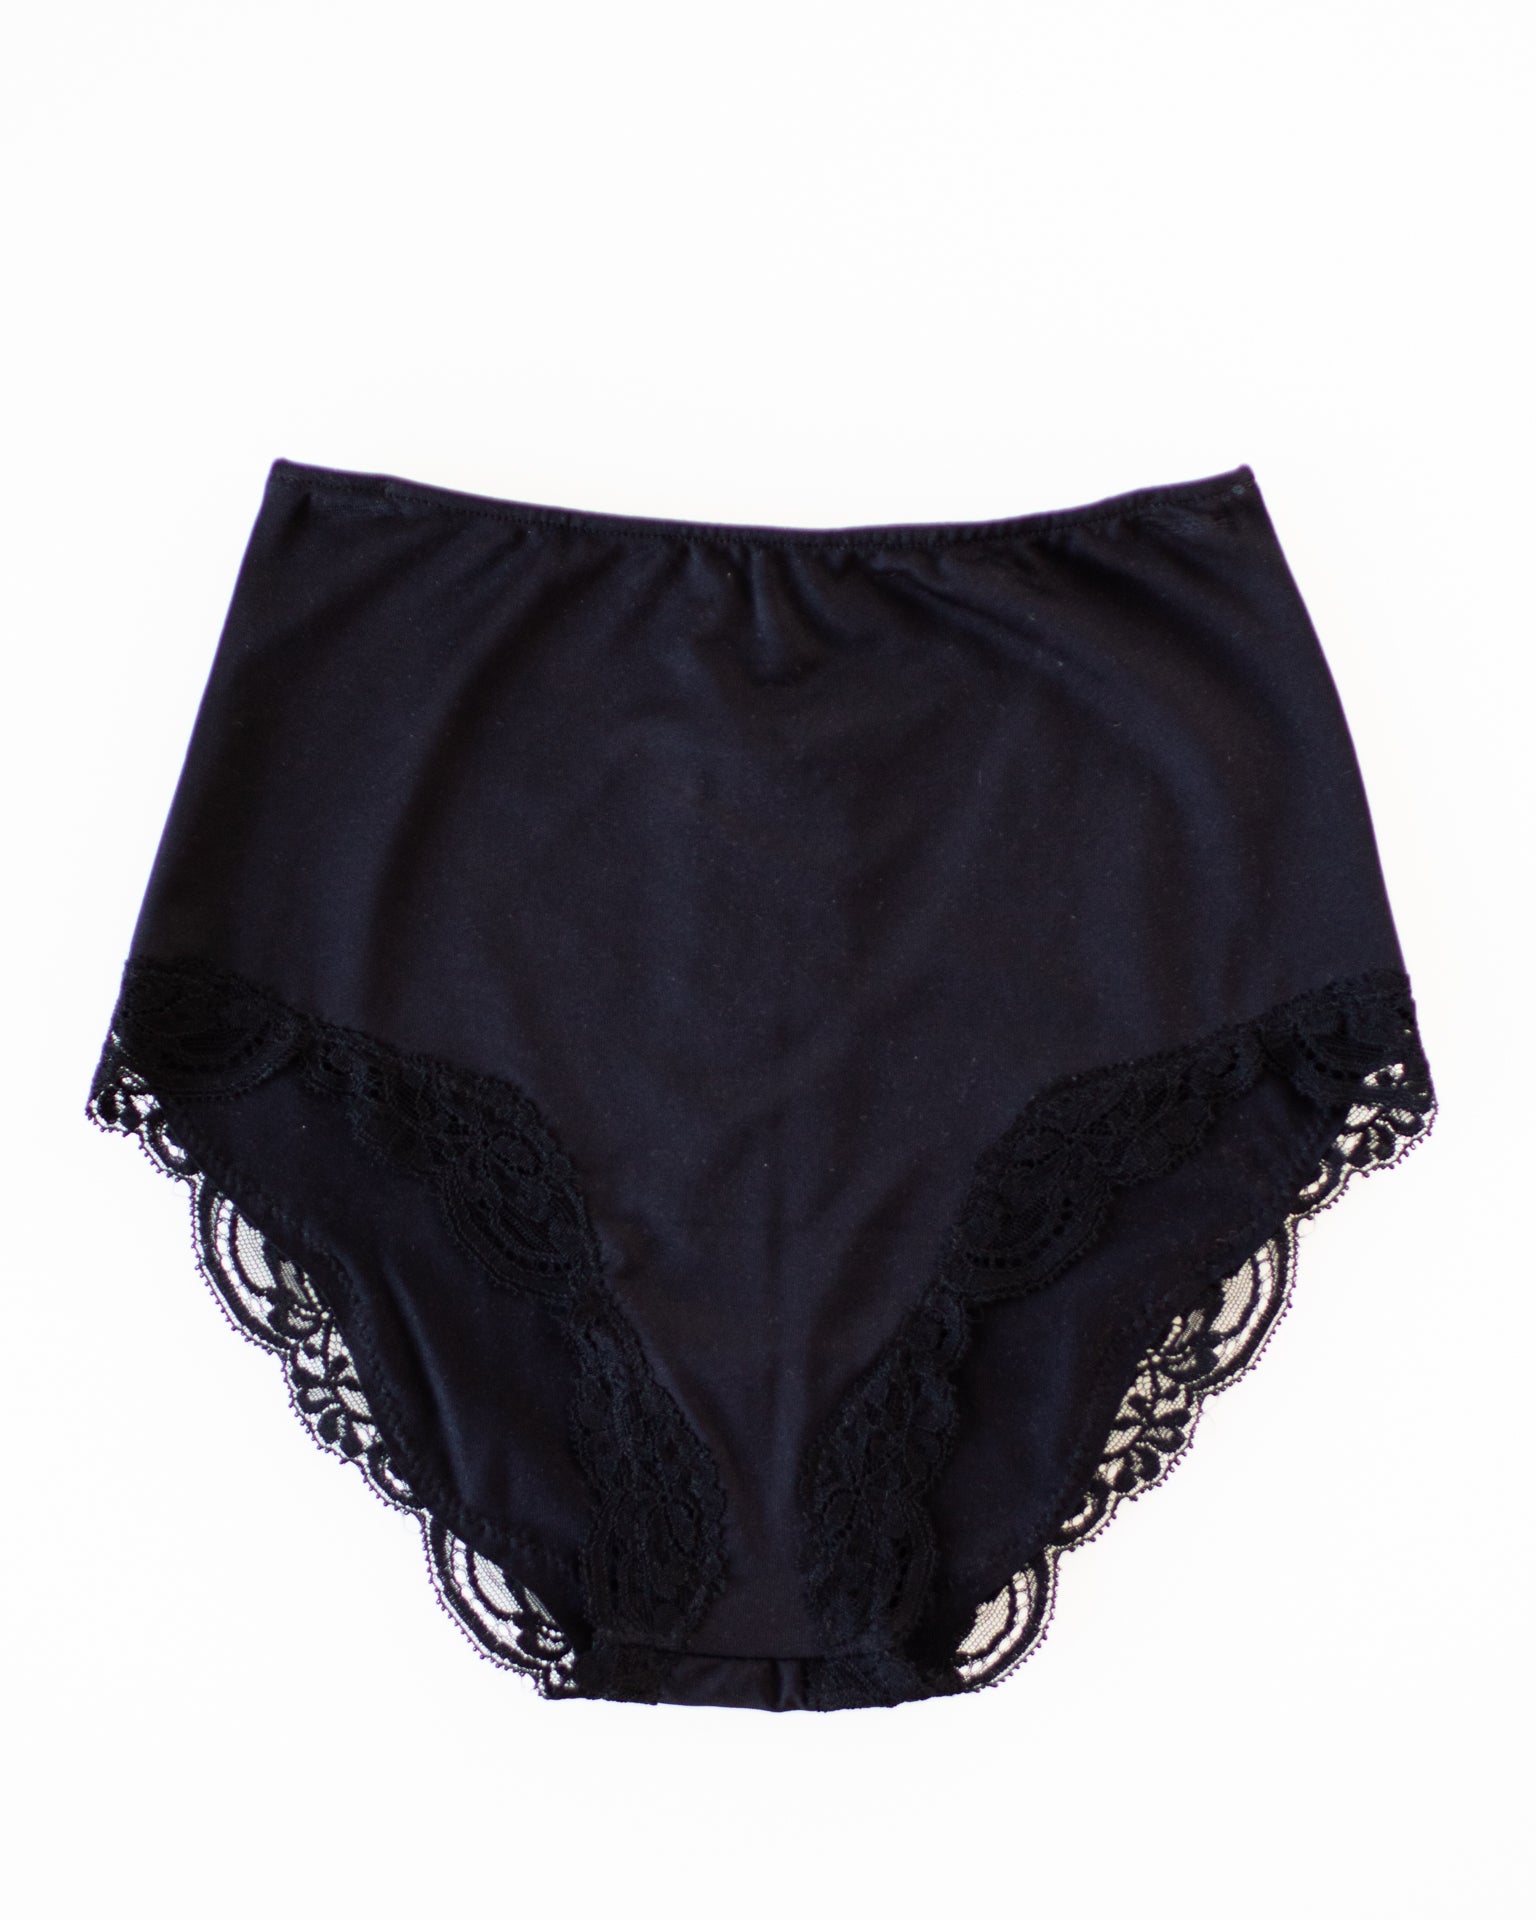 High waist cotton lace panty briefs